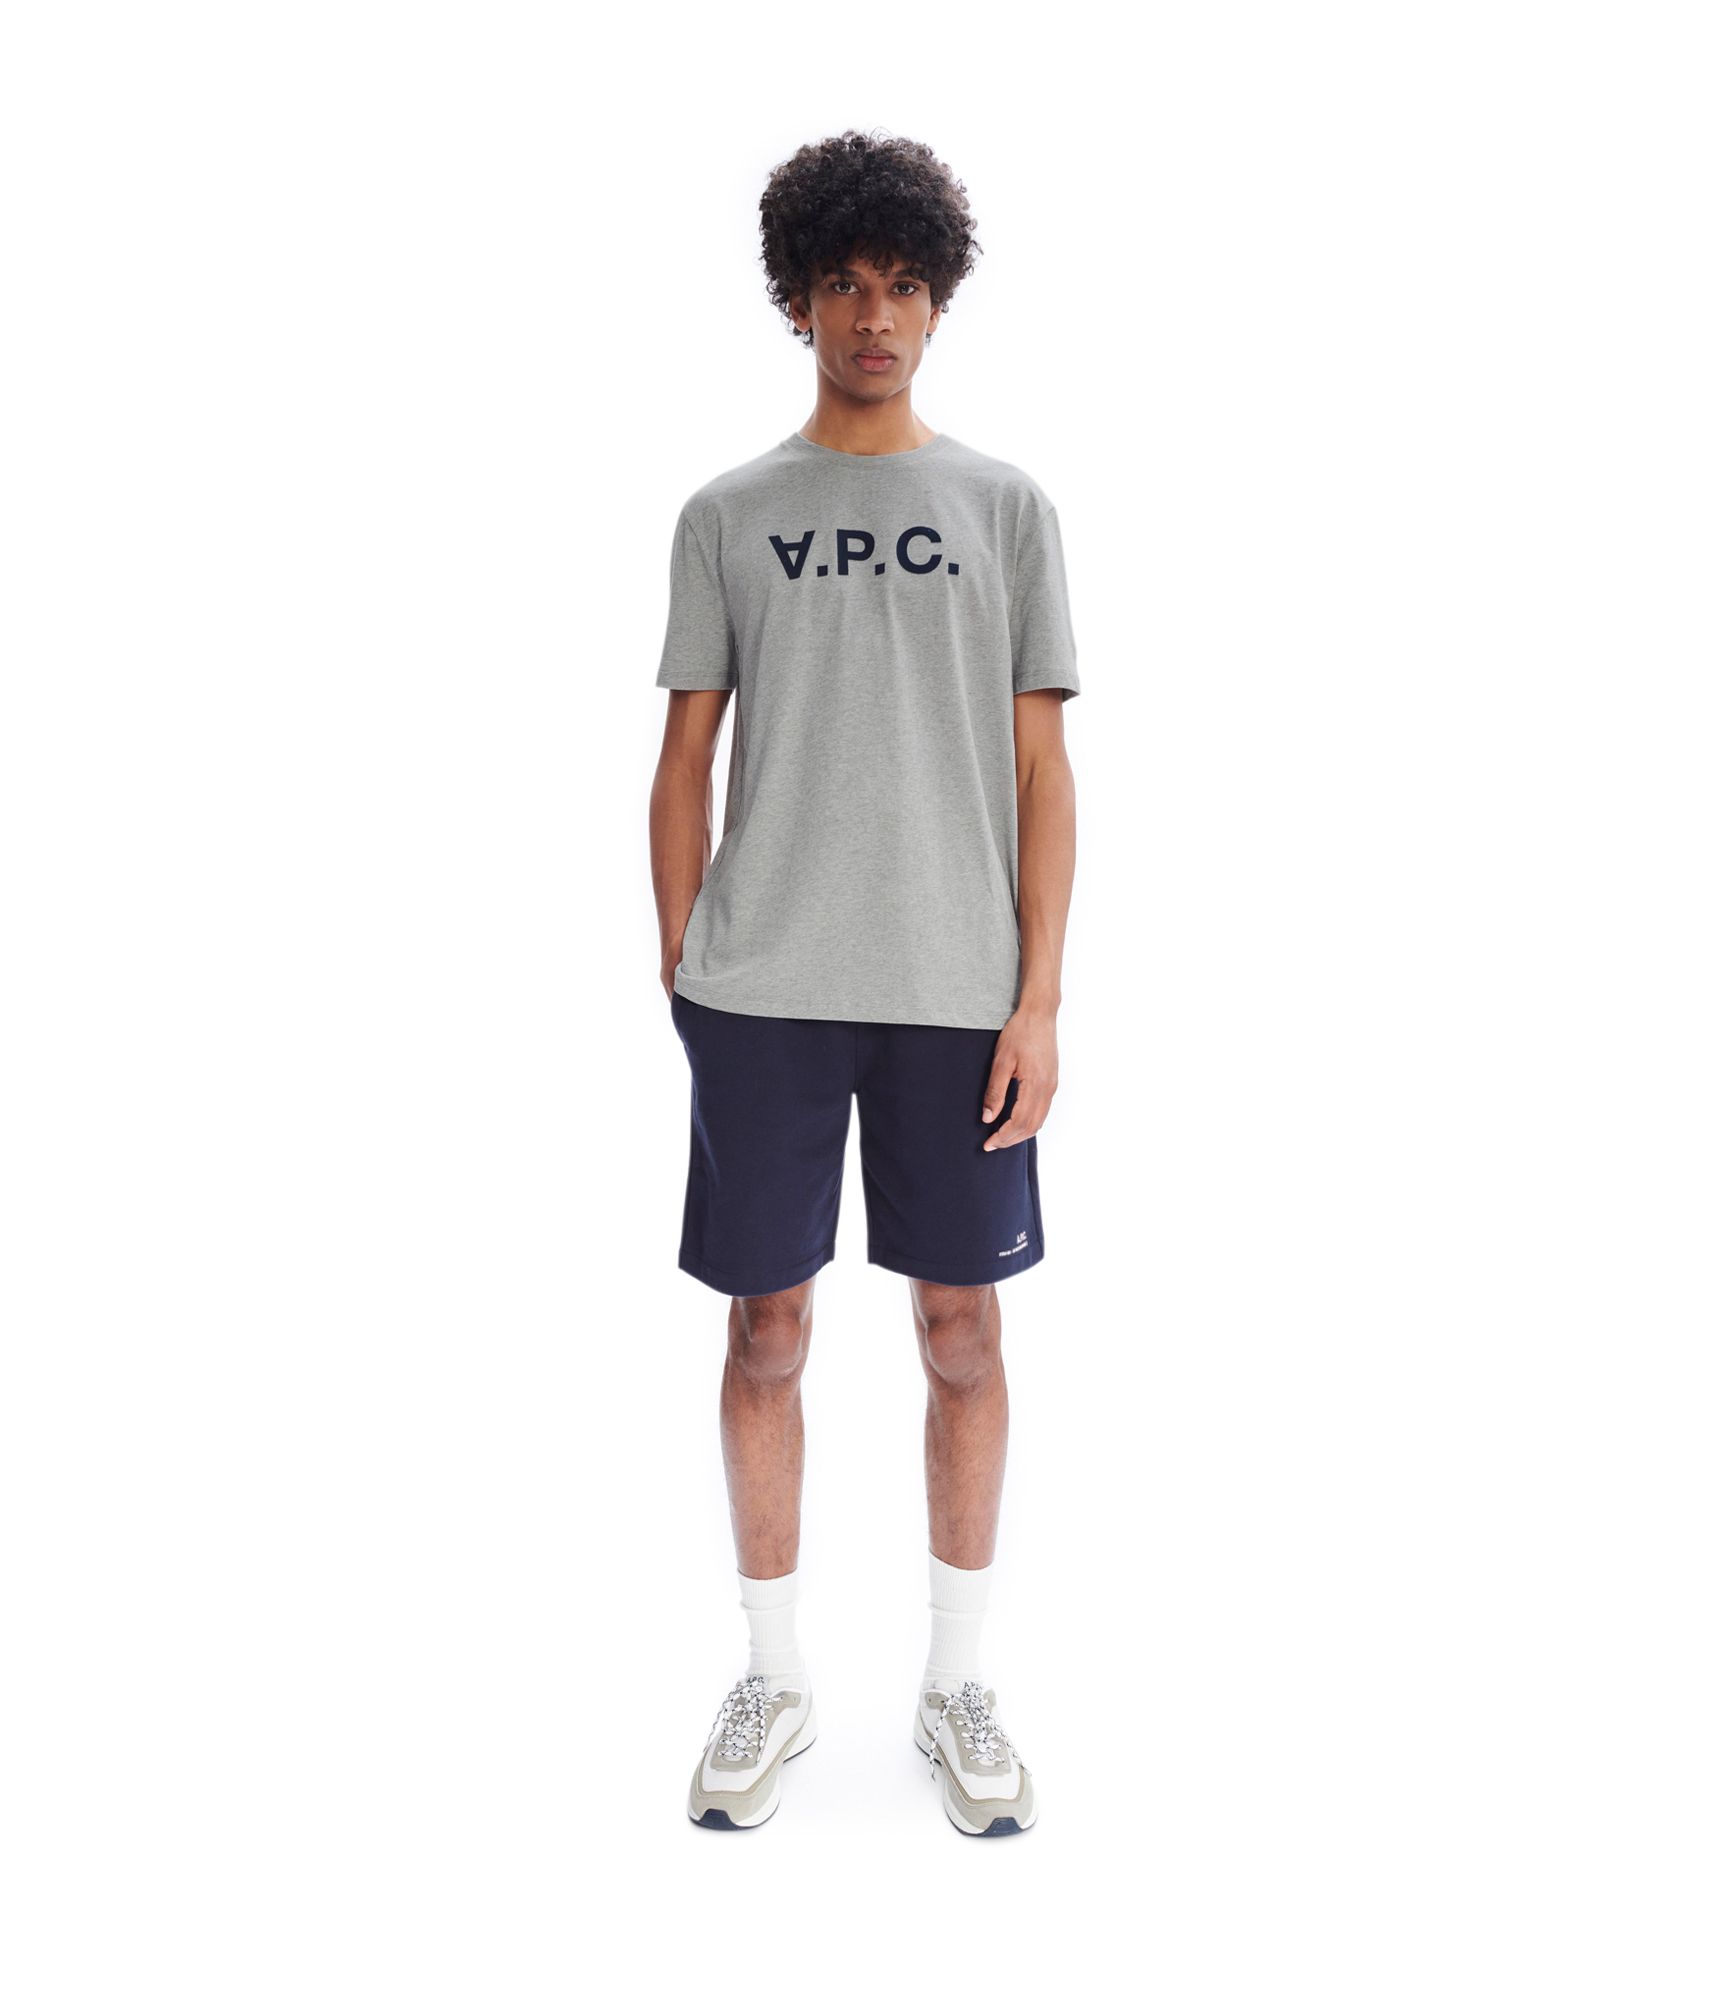 hegn tema har VPC Color H T-shirt Pale heather grey | A.P.C.